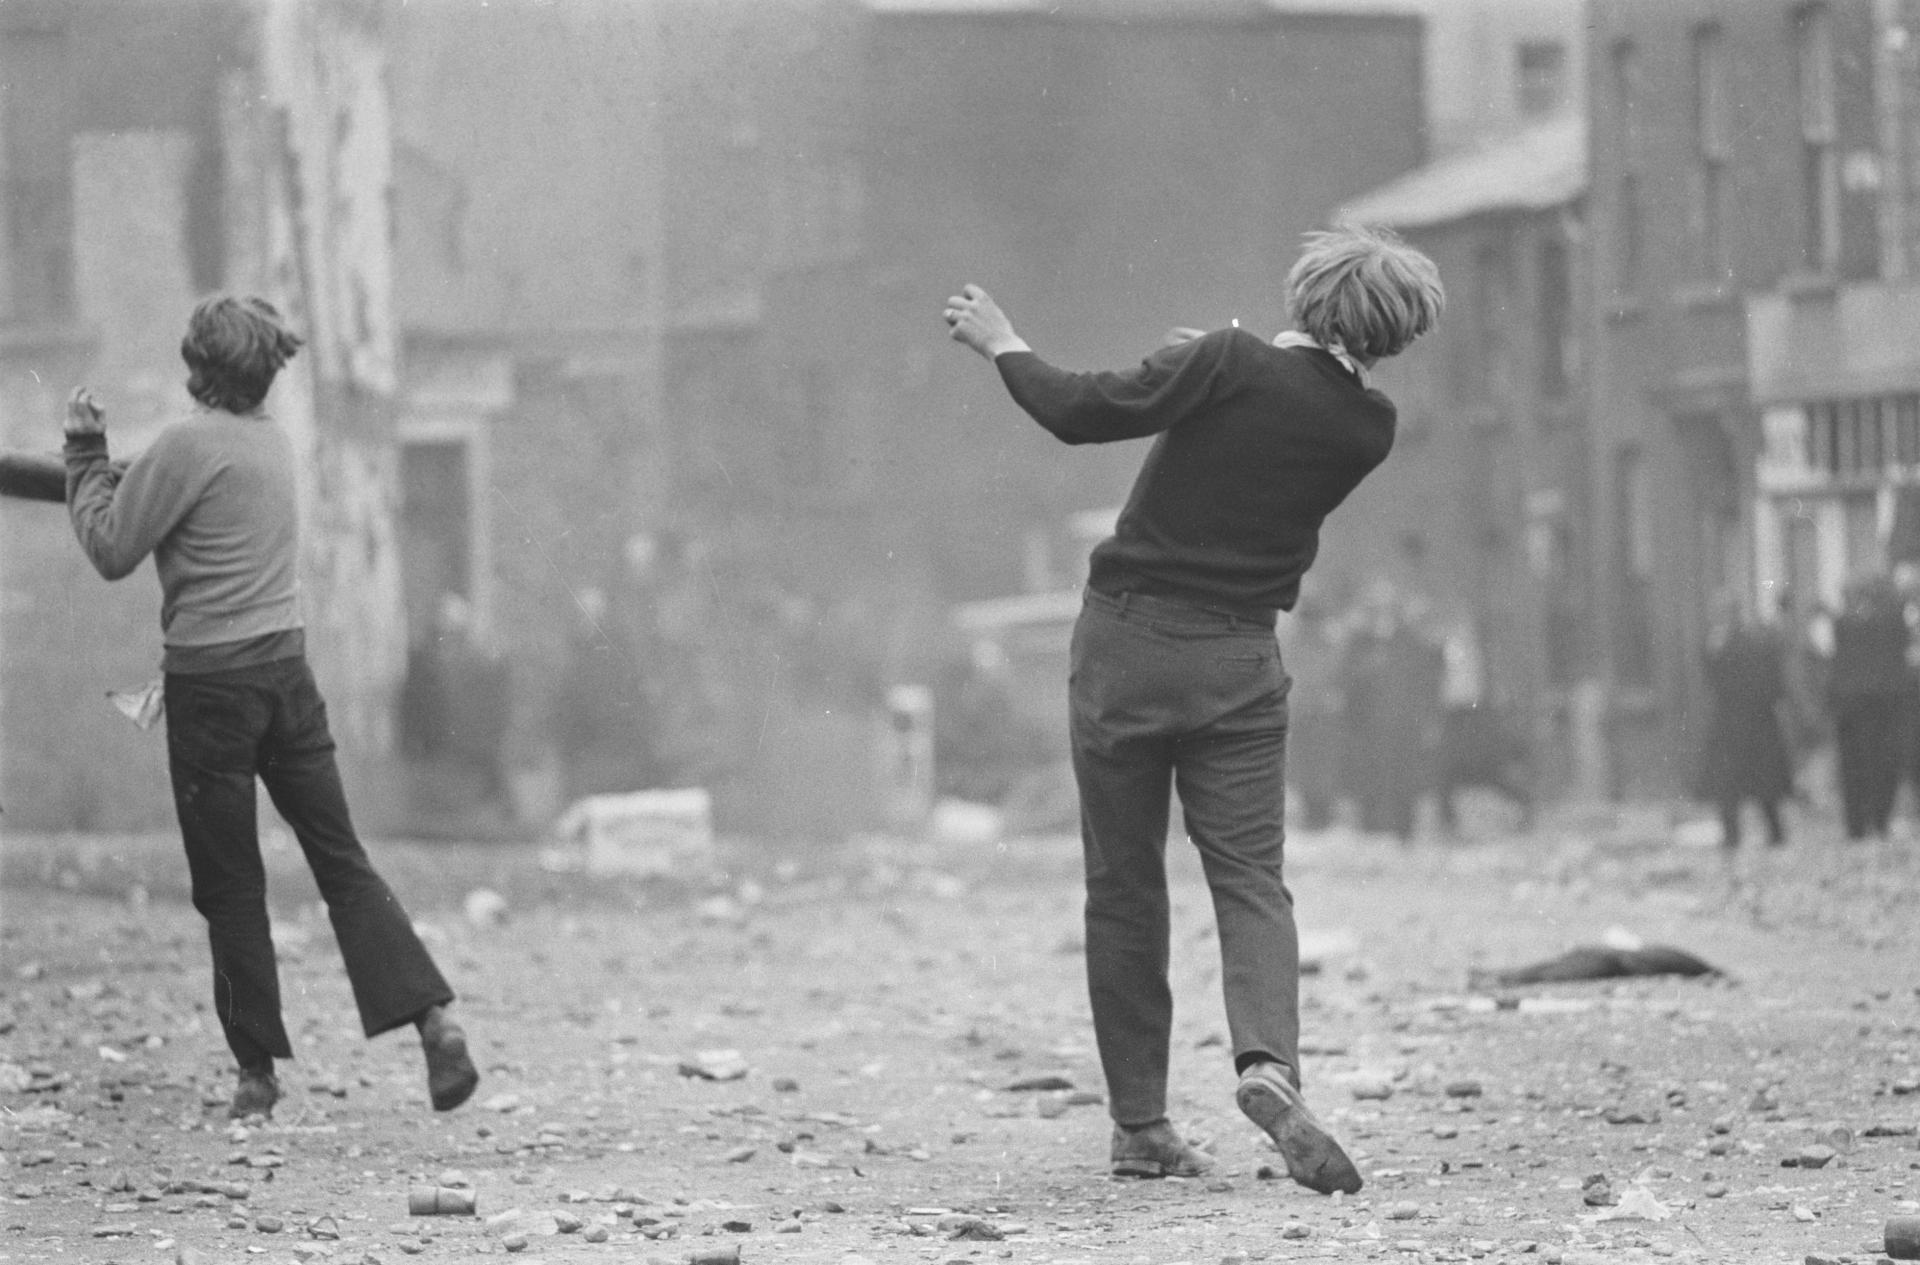 Gilles Caron, Manifestations anticatholiques, Londonderry, Irlande du Nord, 1969